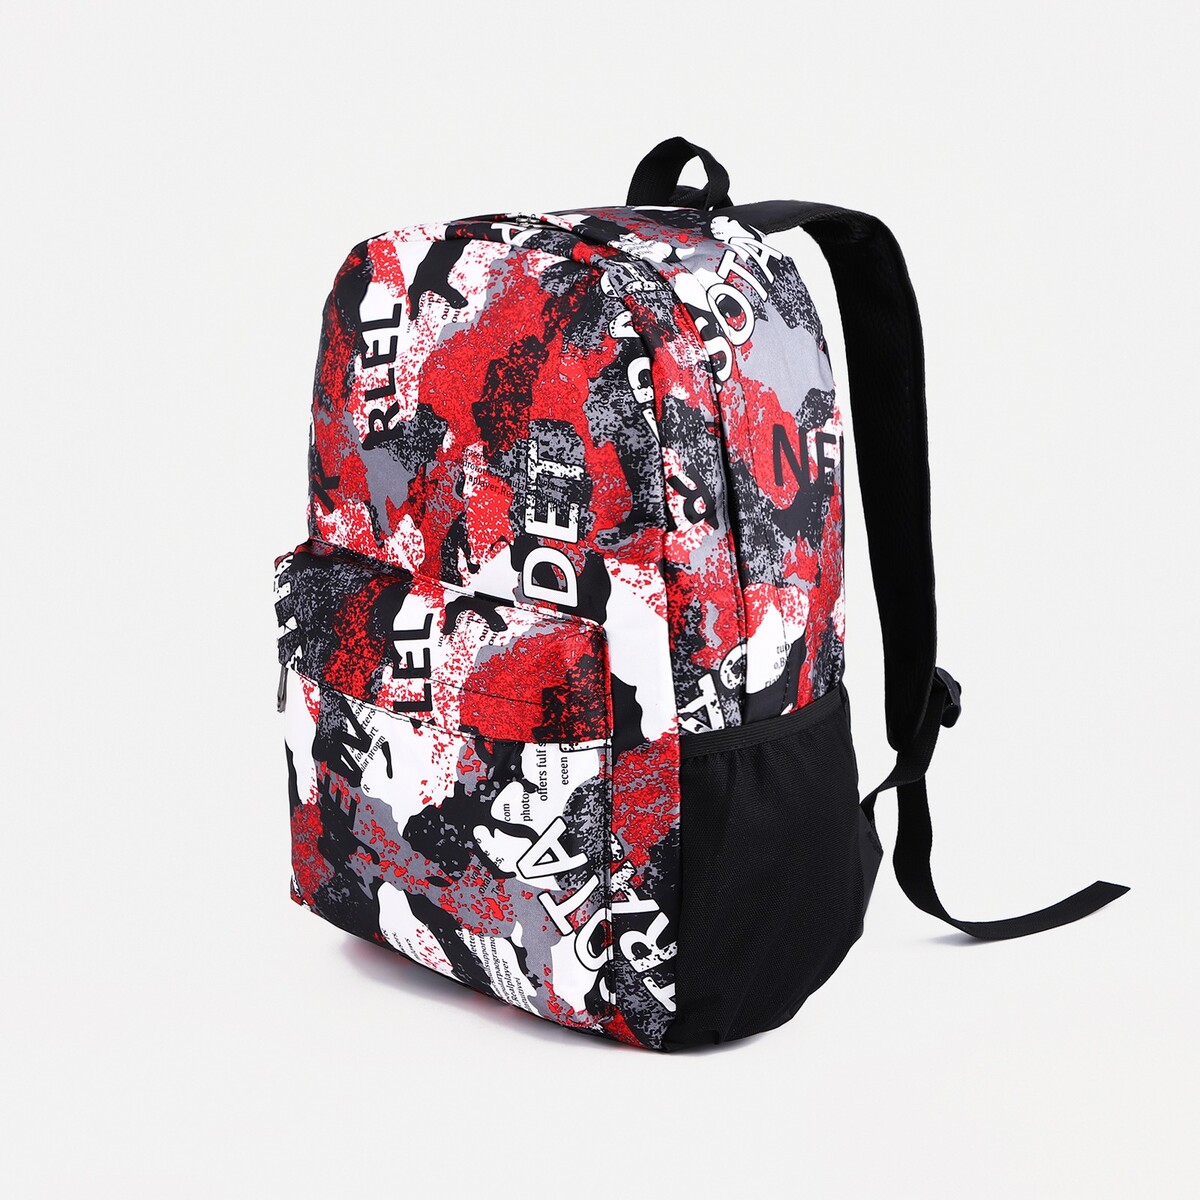 Рюкзак молодежный из текстиля, 3 кармана, цвет серый/красный рюкзак hike pack 22 красный